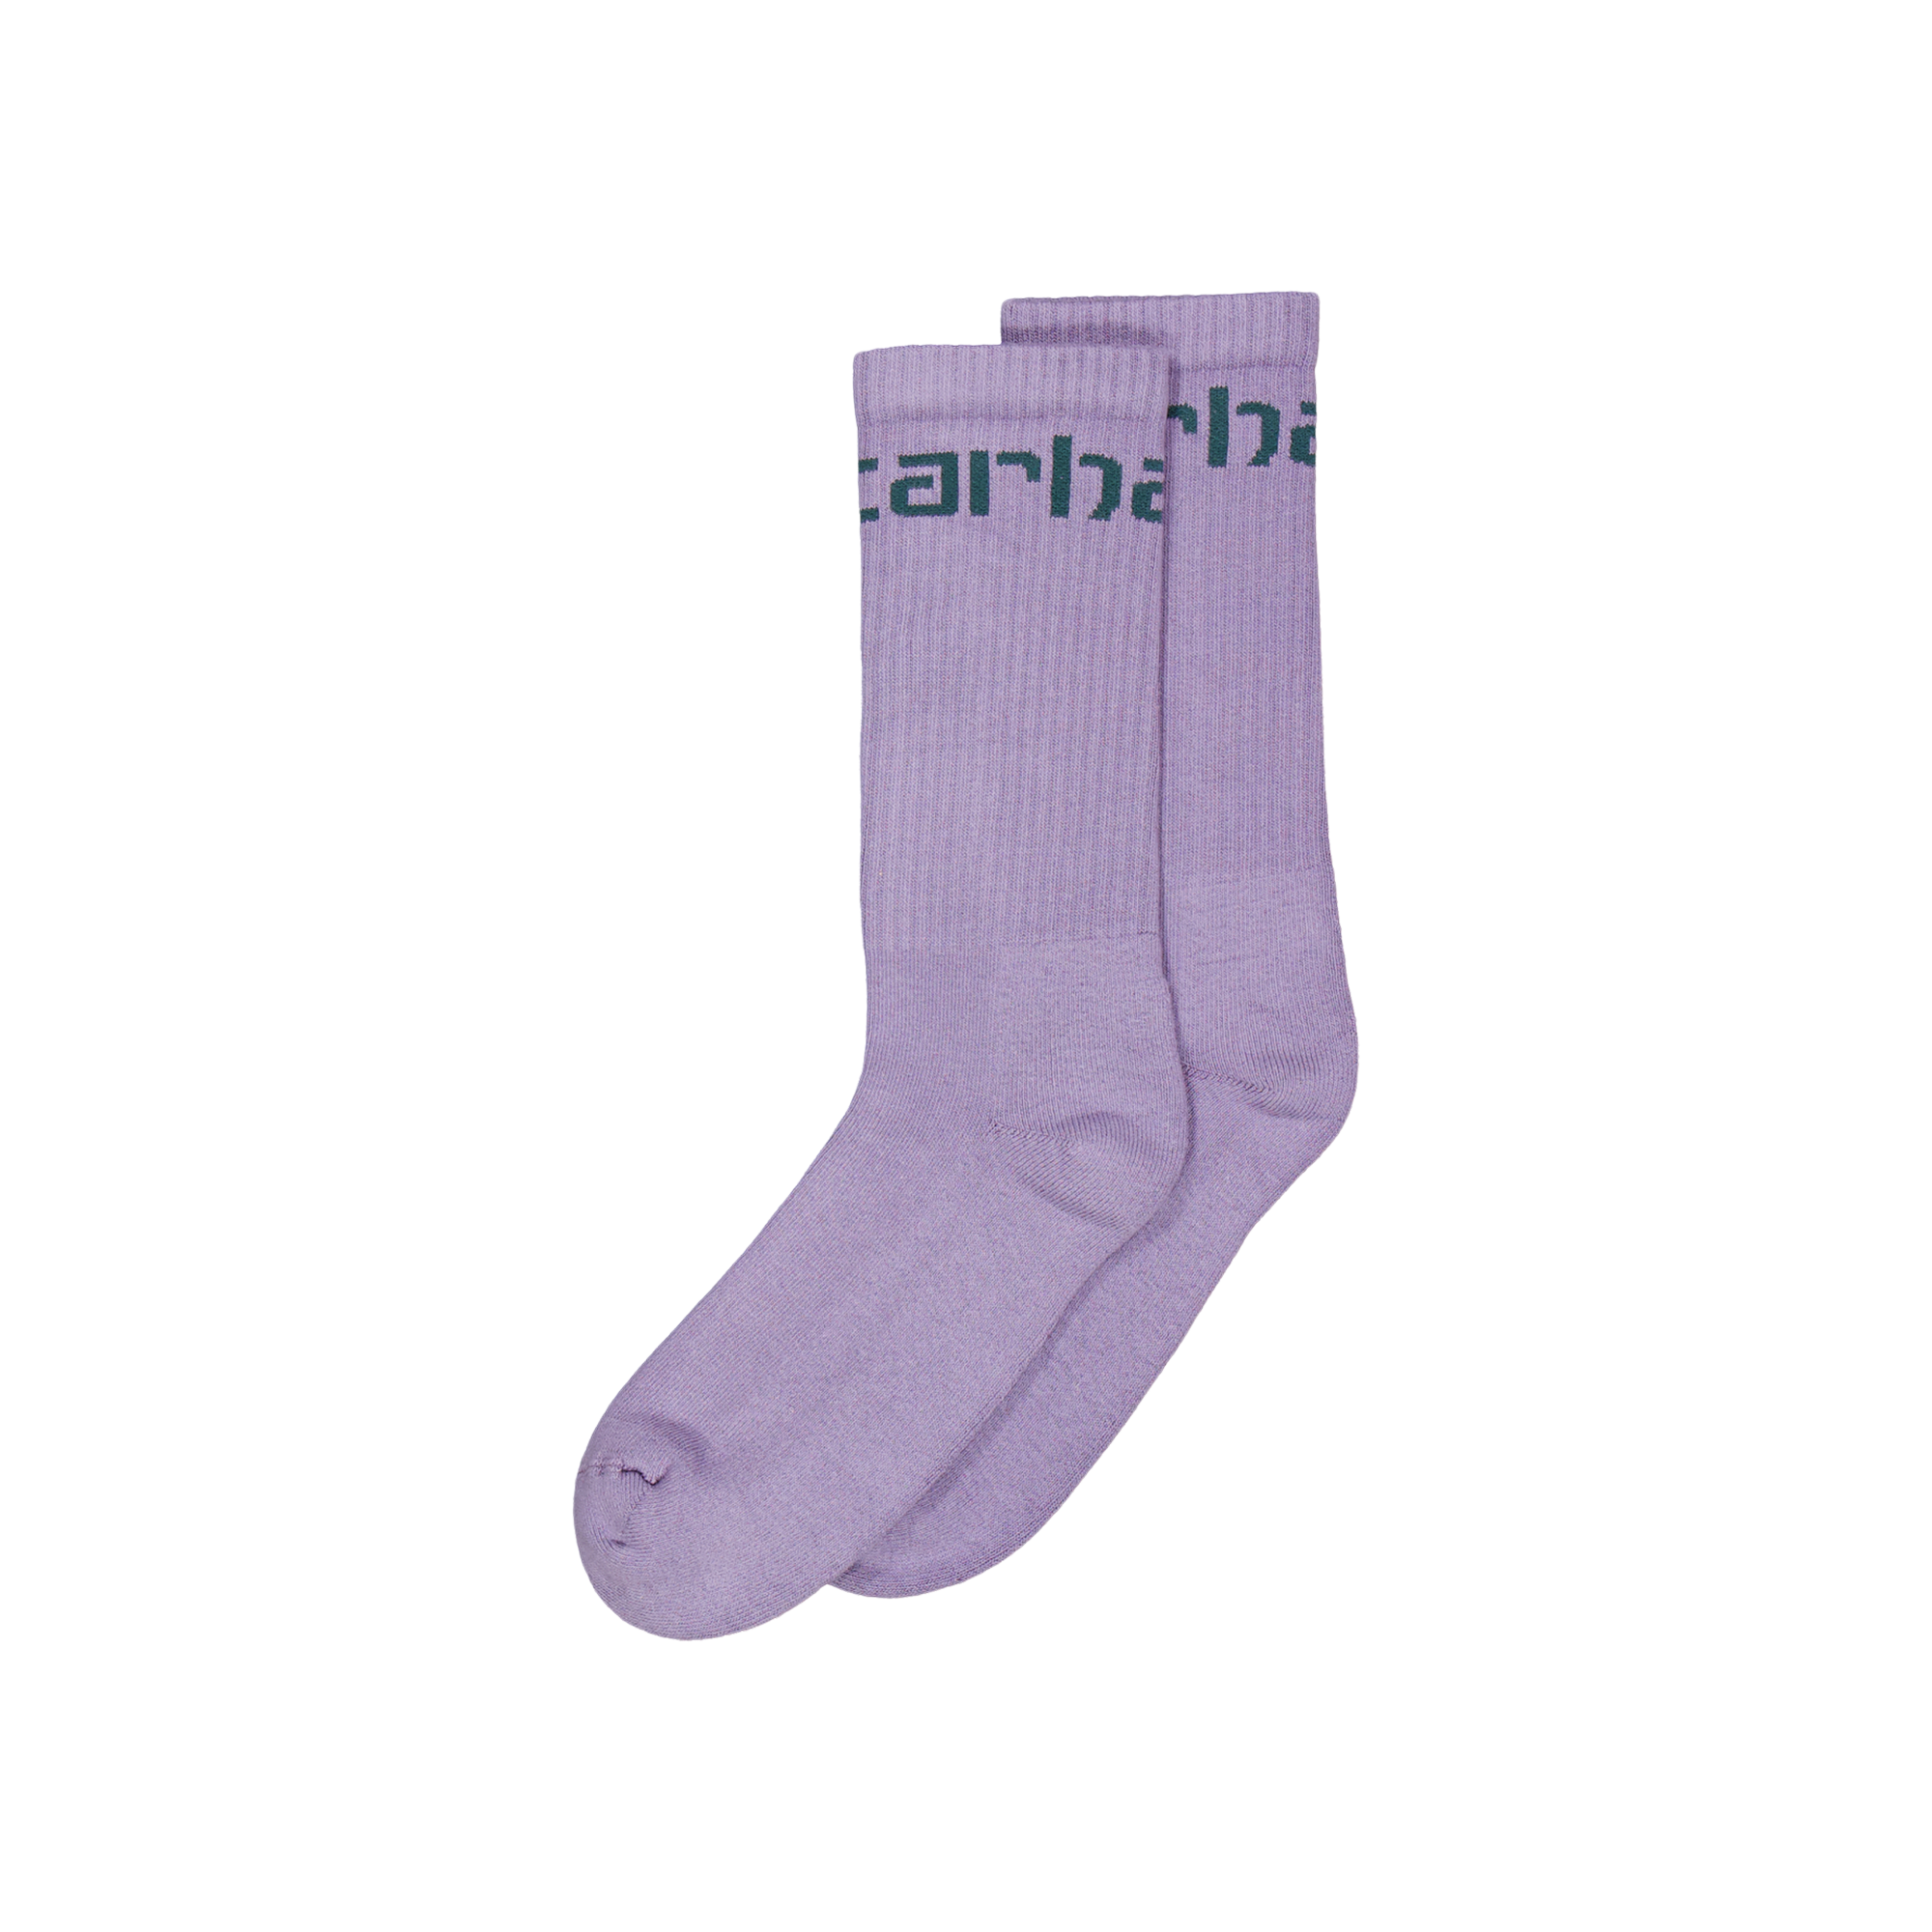 Carhartt Socks Glassy Purple / Discovery Gree